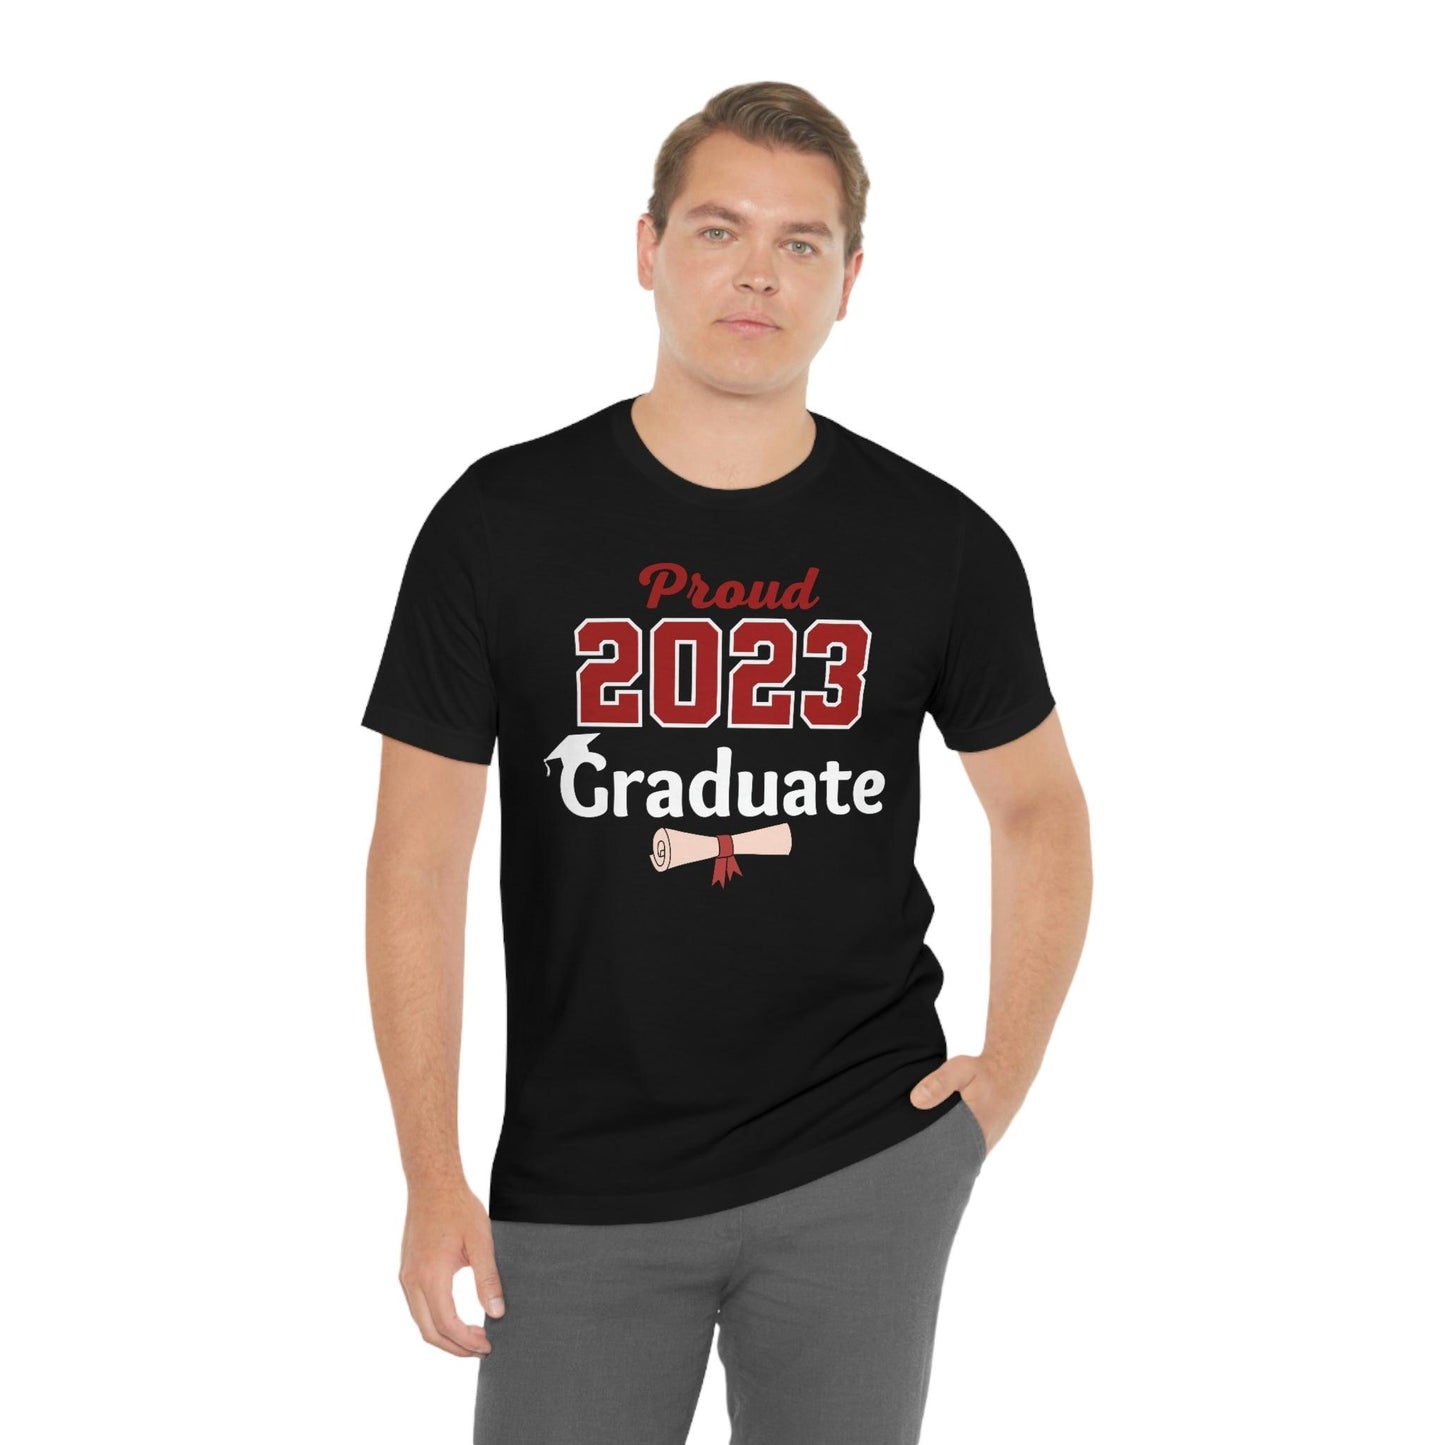 Proud 2023 graduate - Graduate shirt - Graduation shirt - Graduation gift